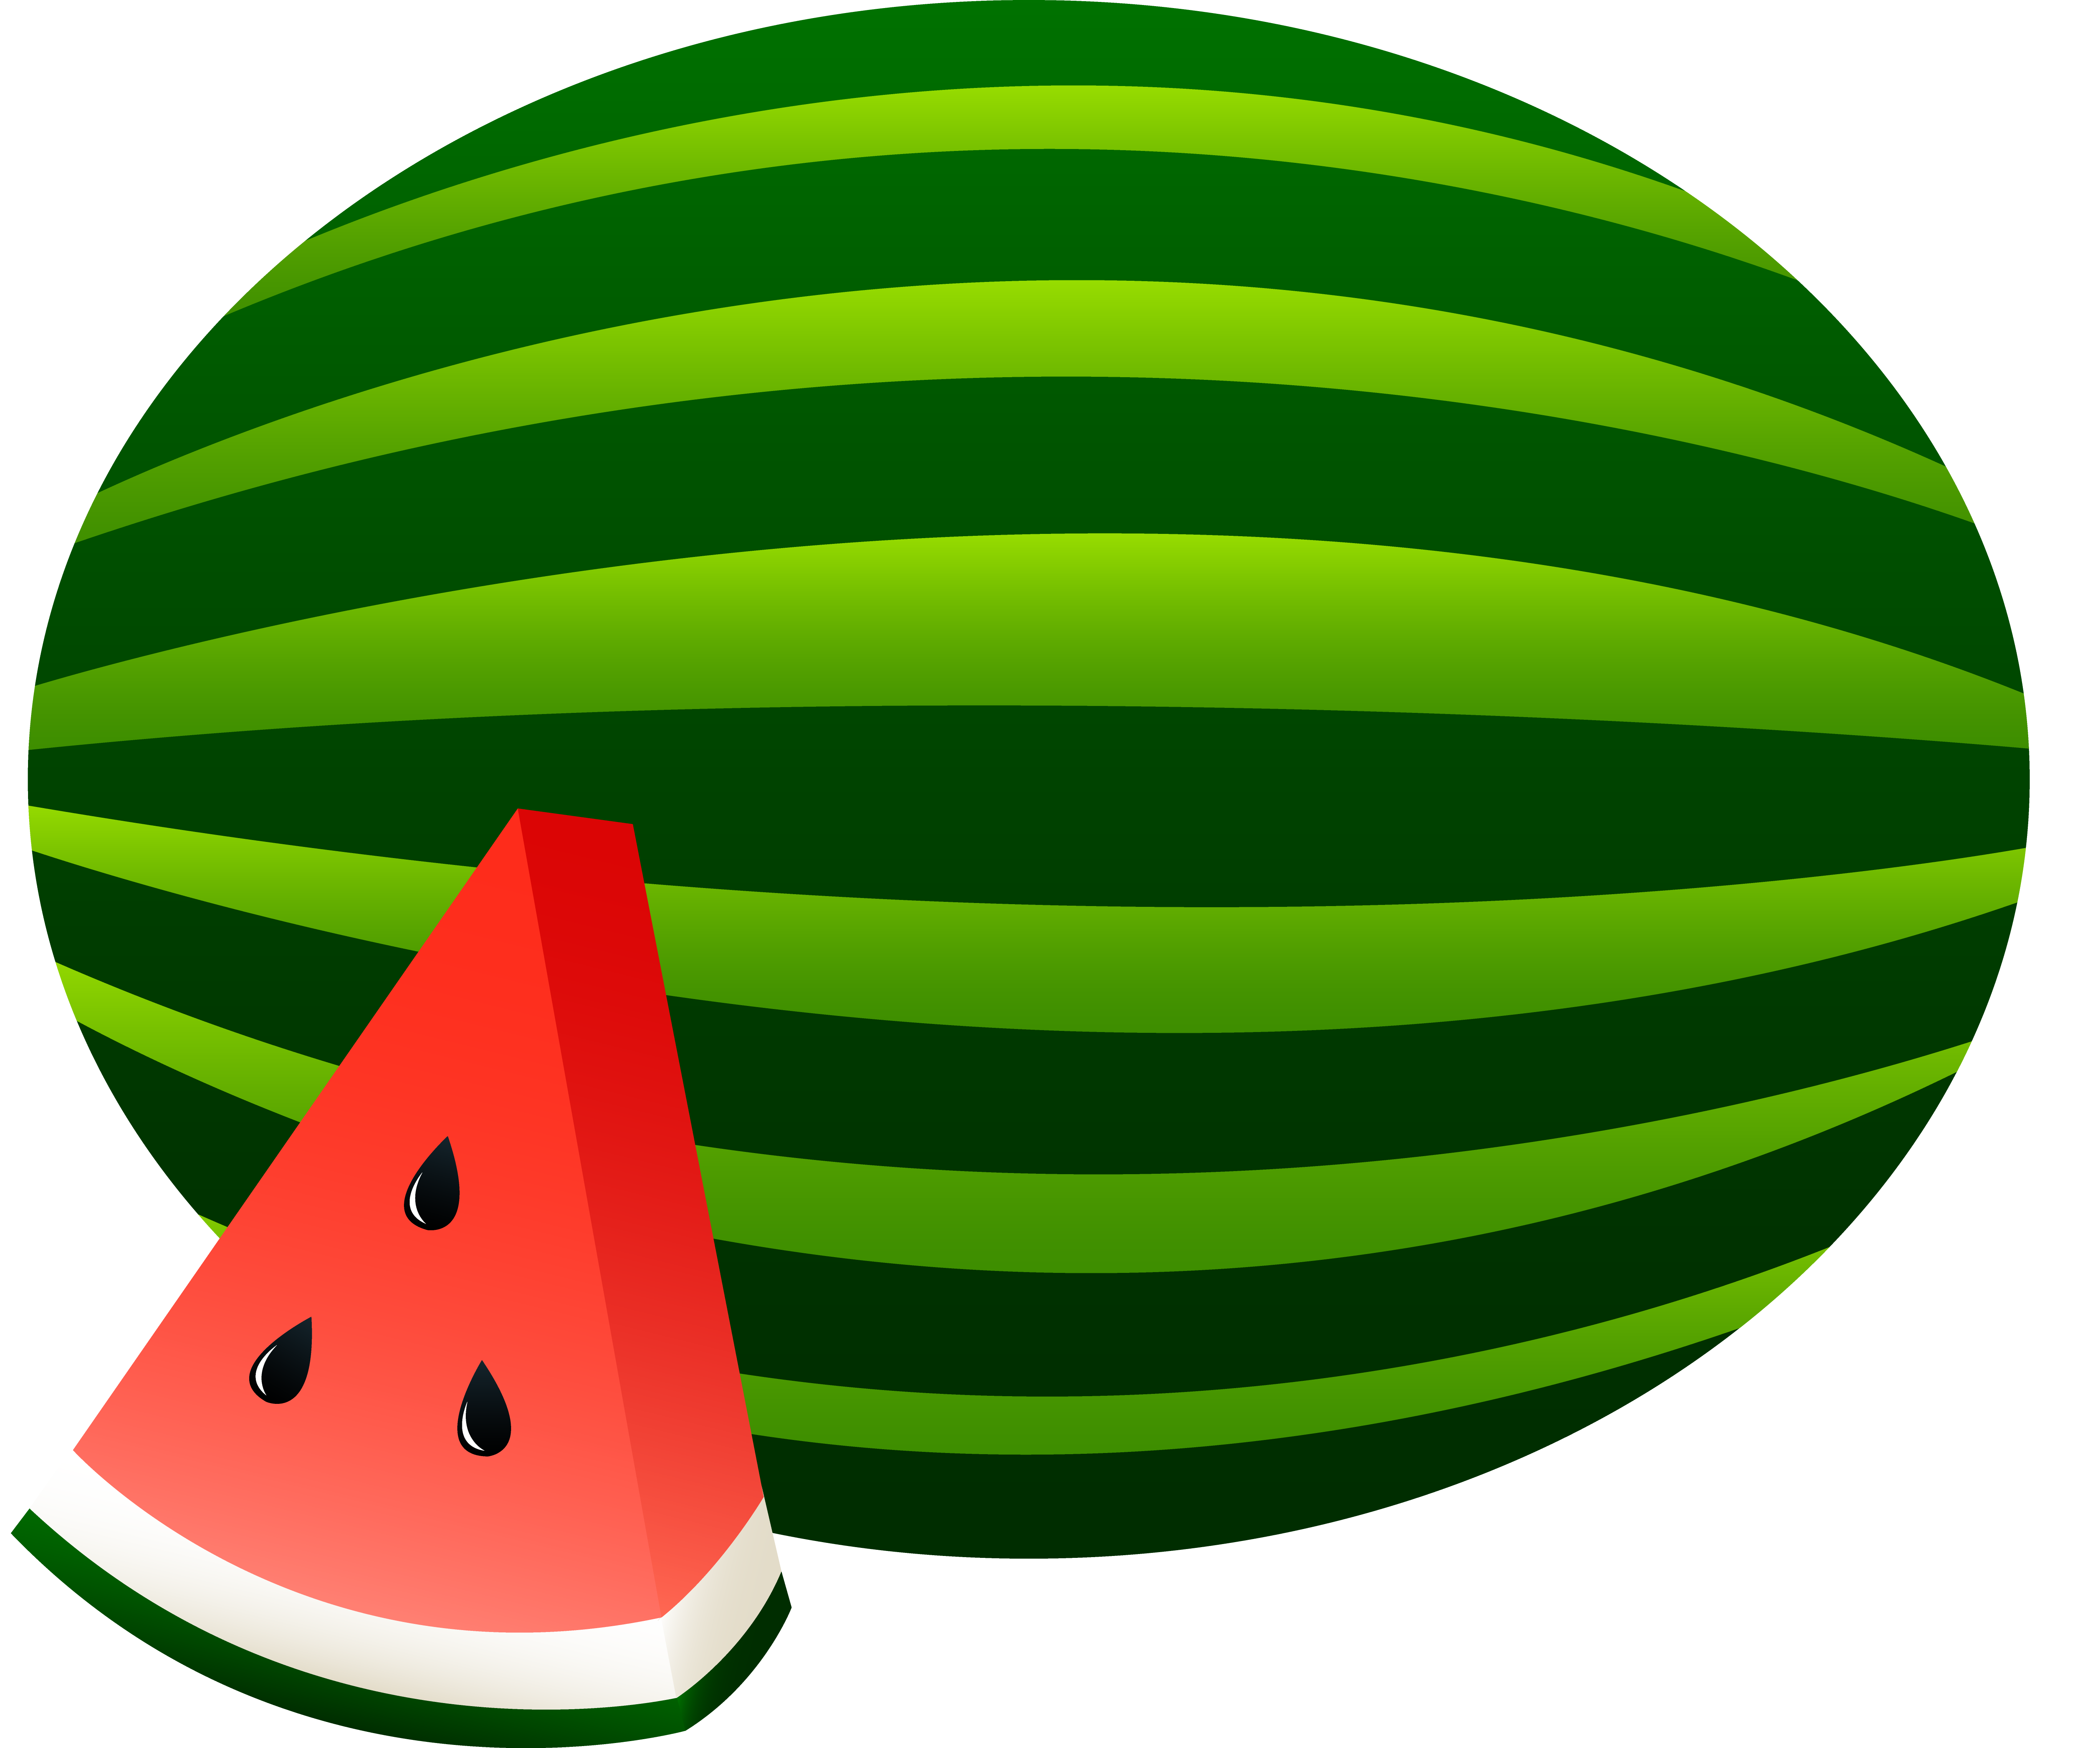 Watermelon Clipart Black And White | Clipart Panda - Free Clipart ...